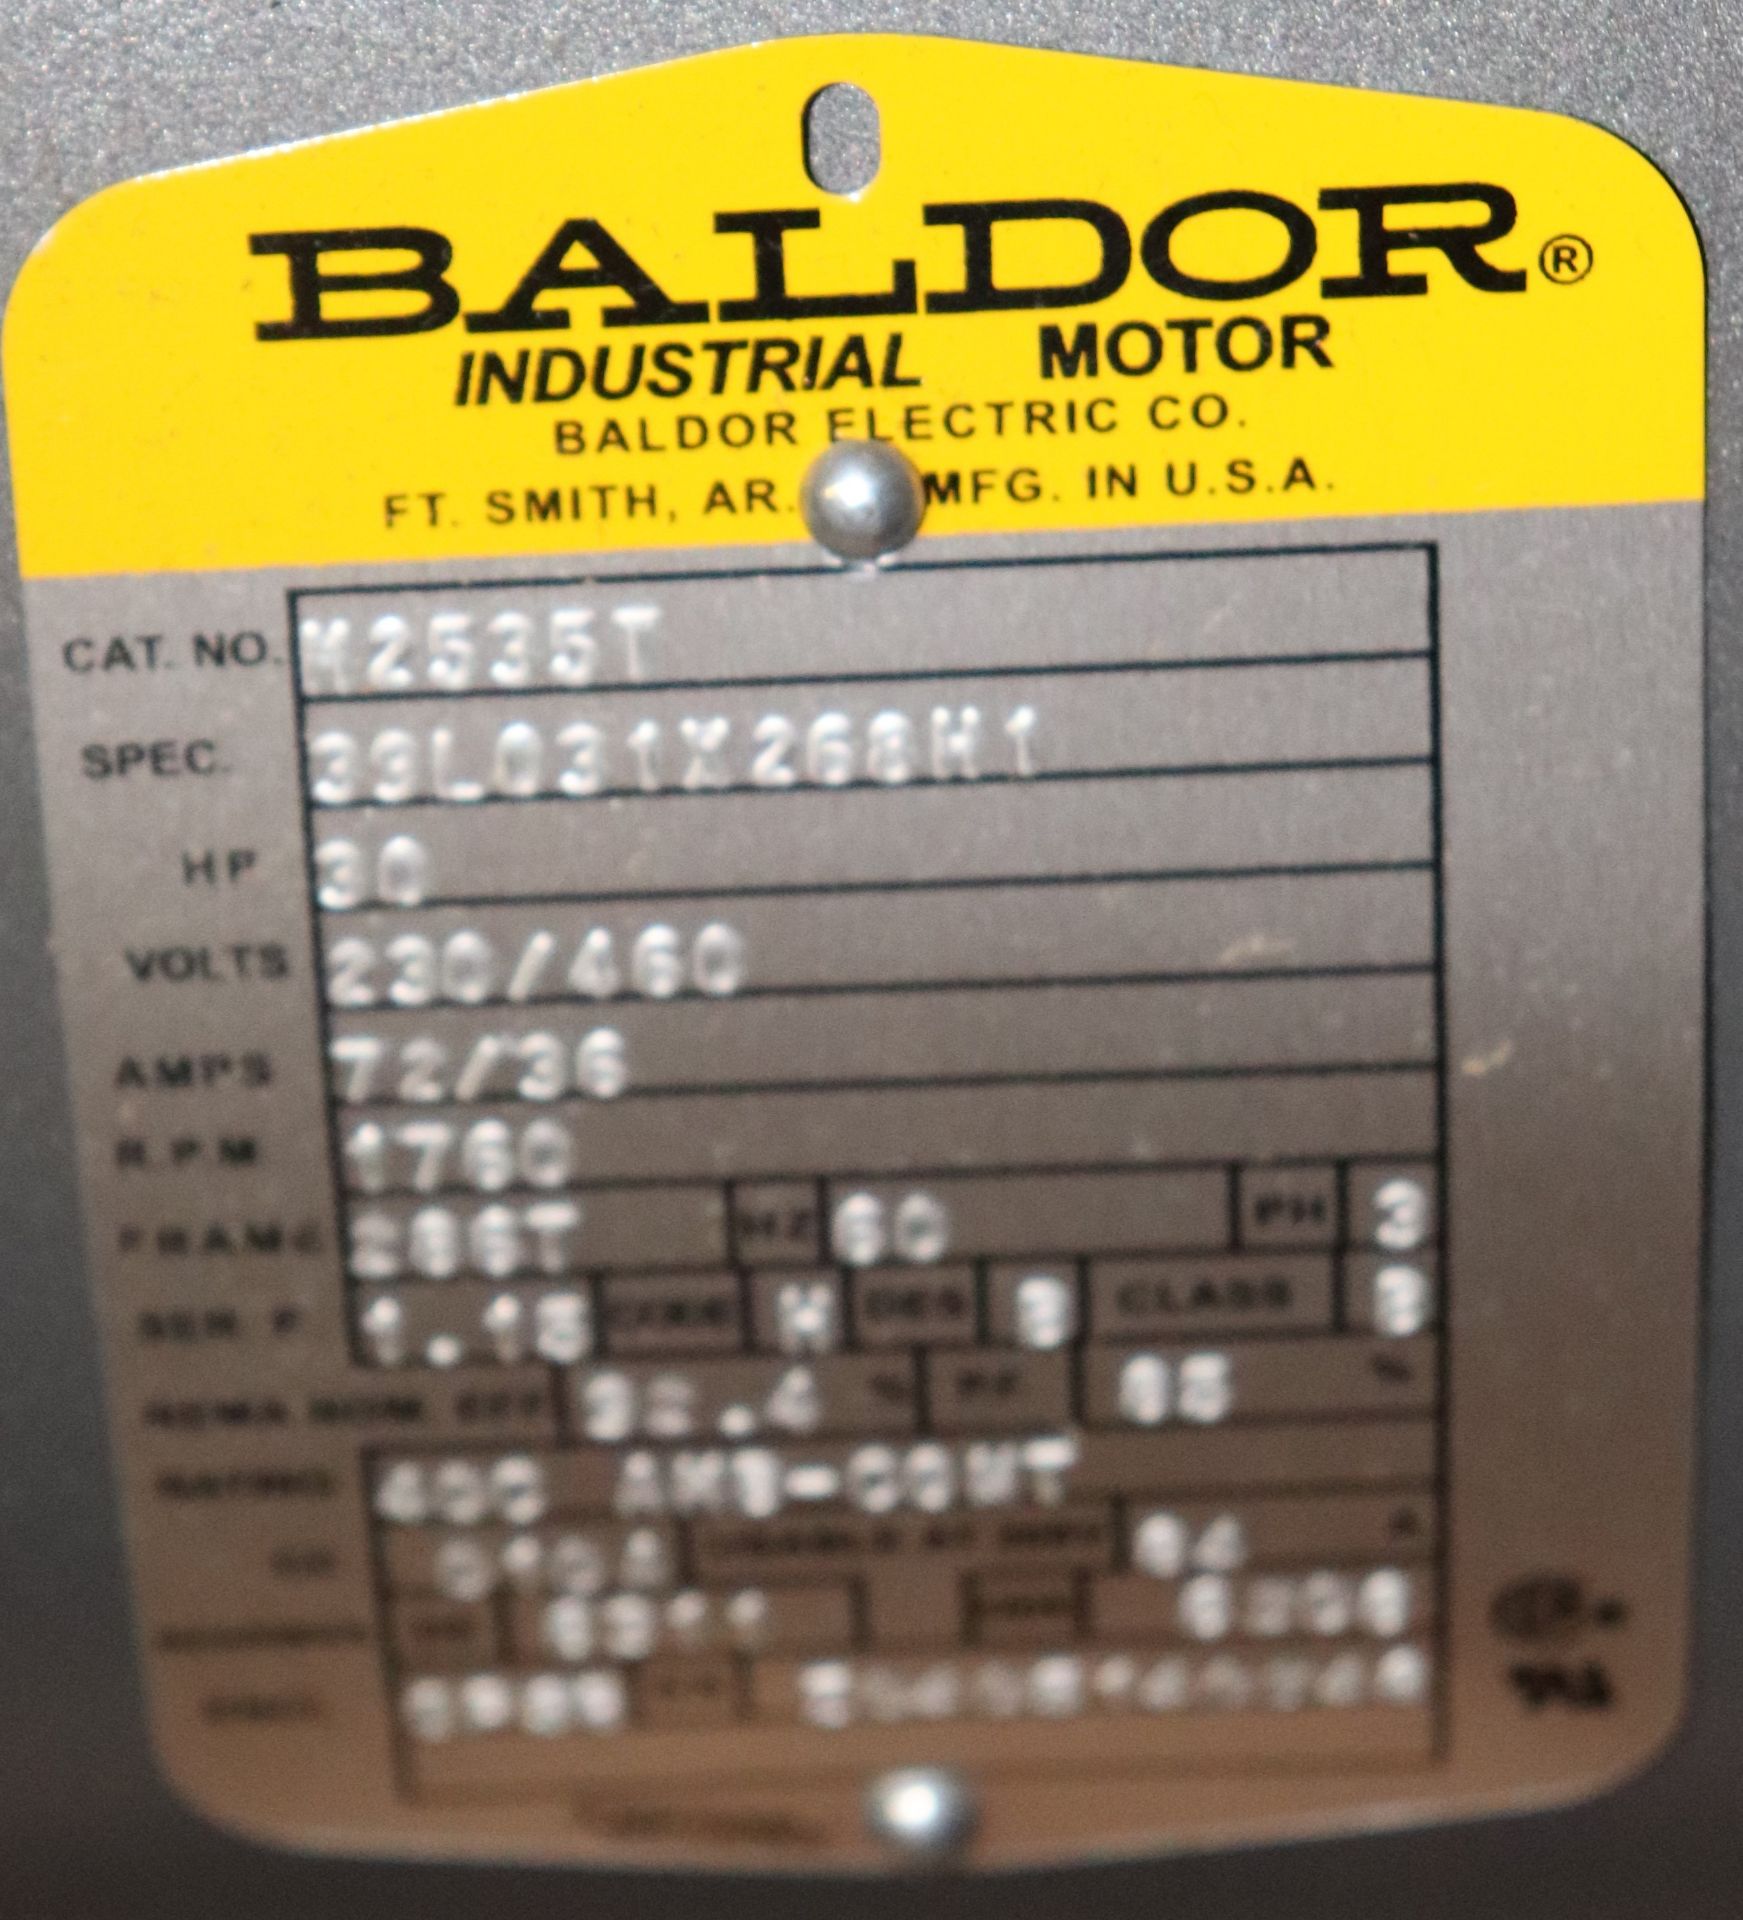 Baldor industrial motor, 30hp - Image 2 of 3